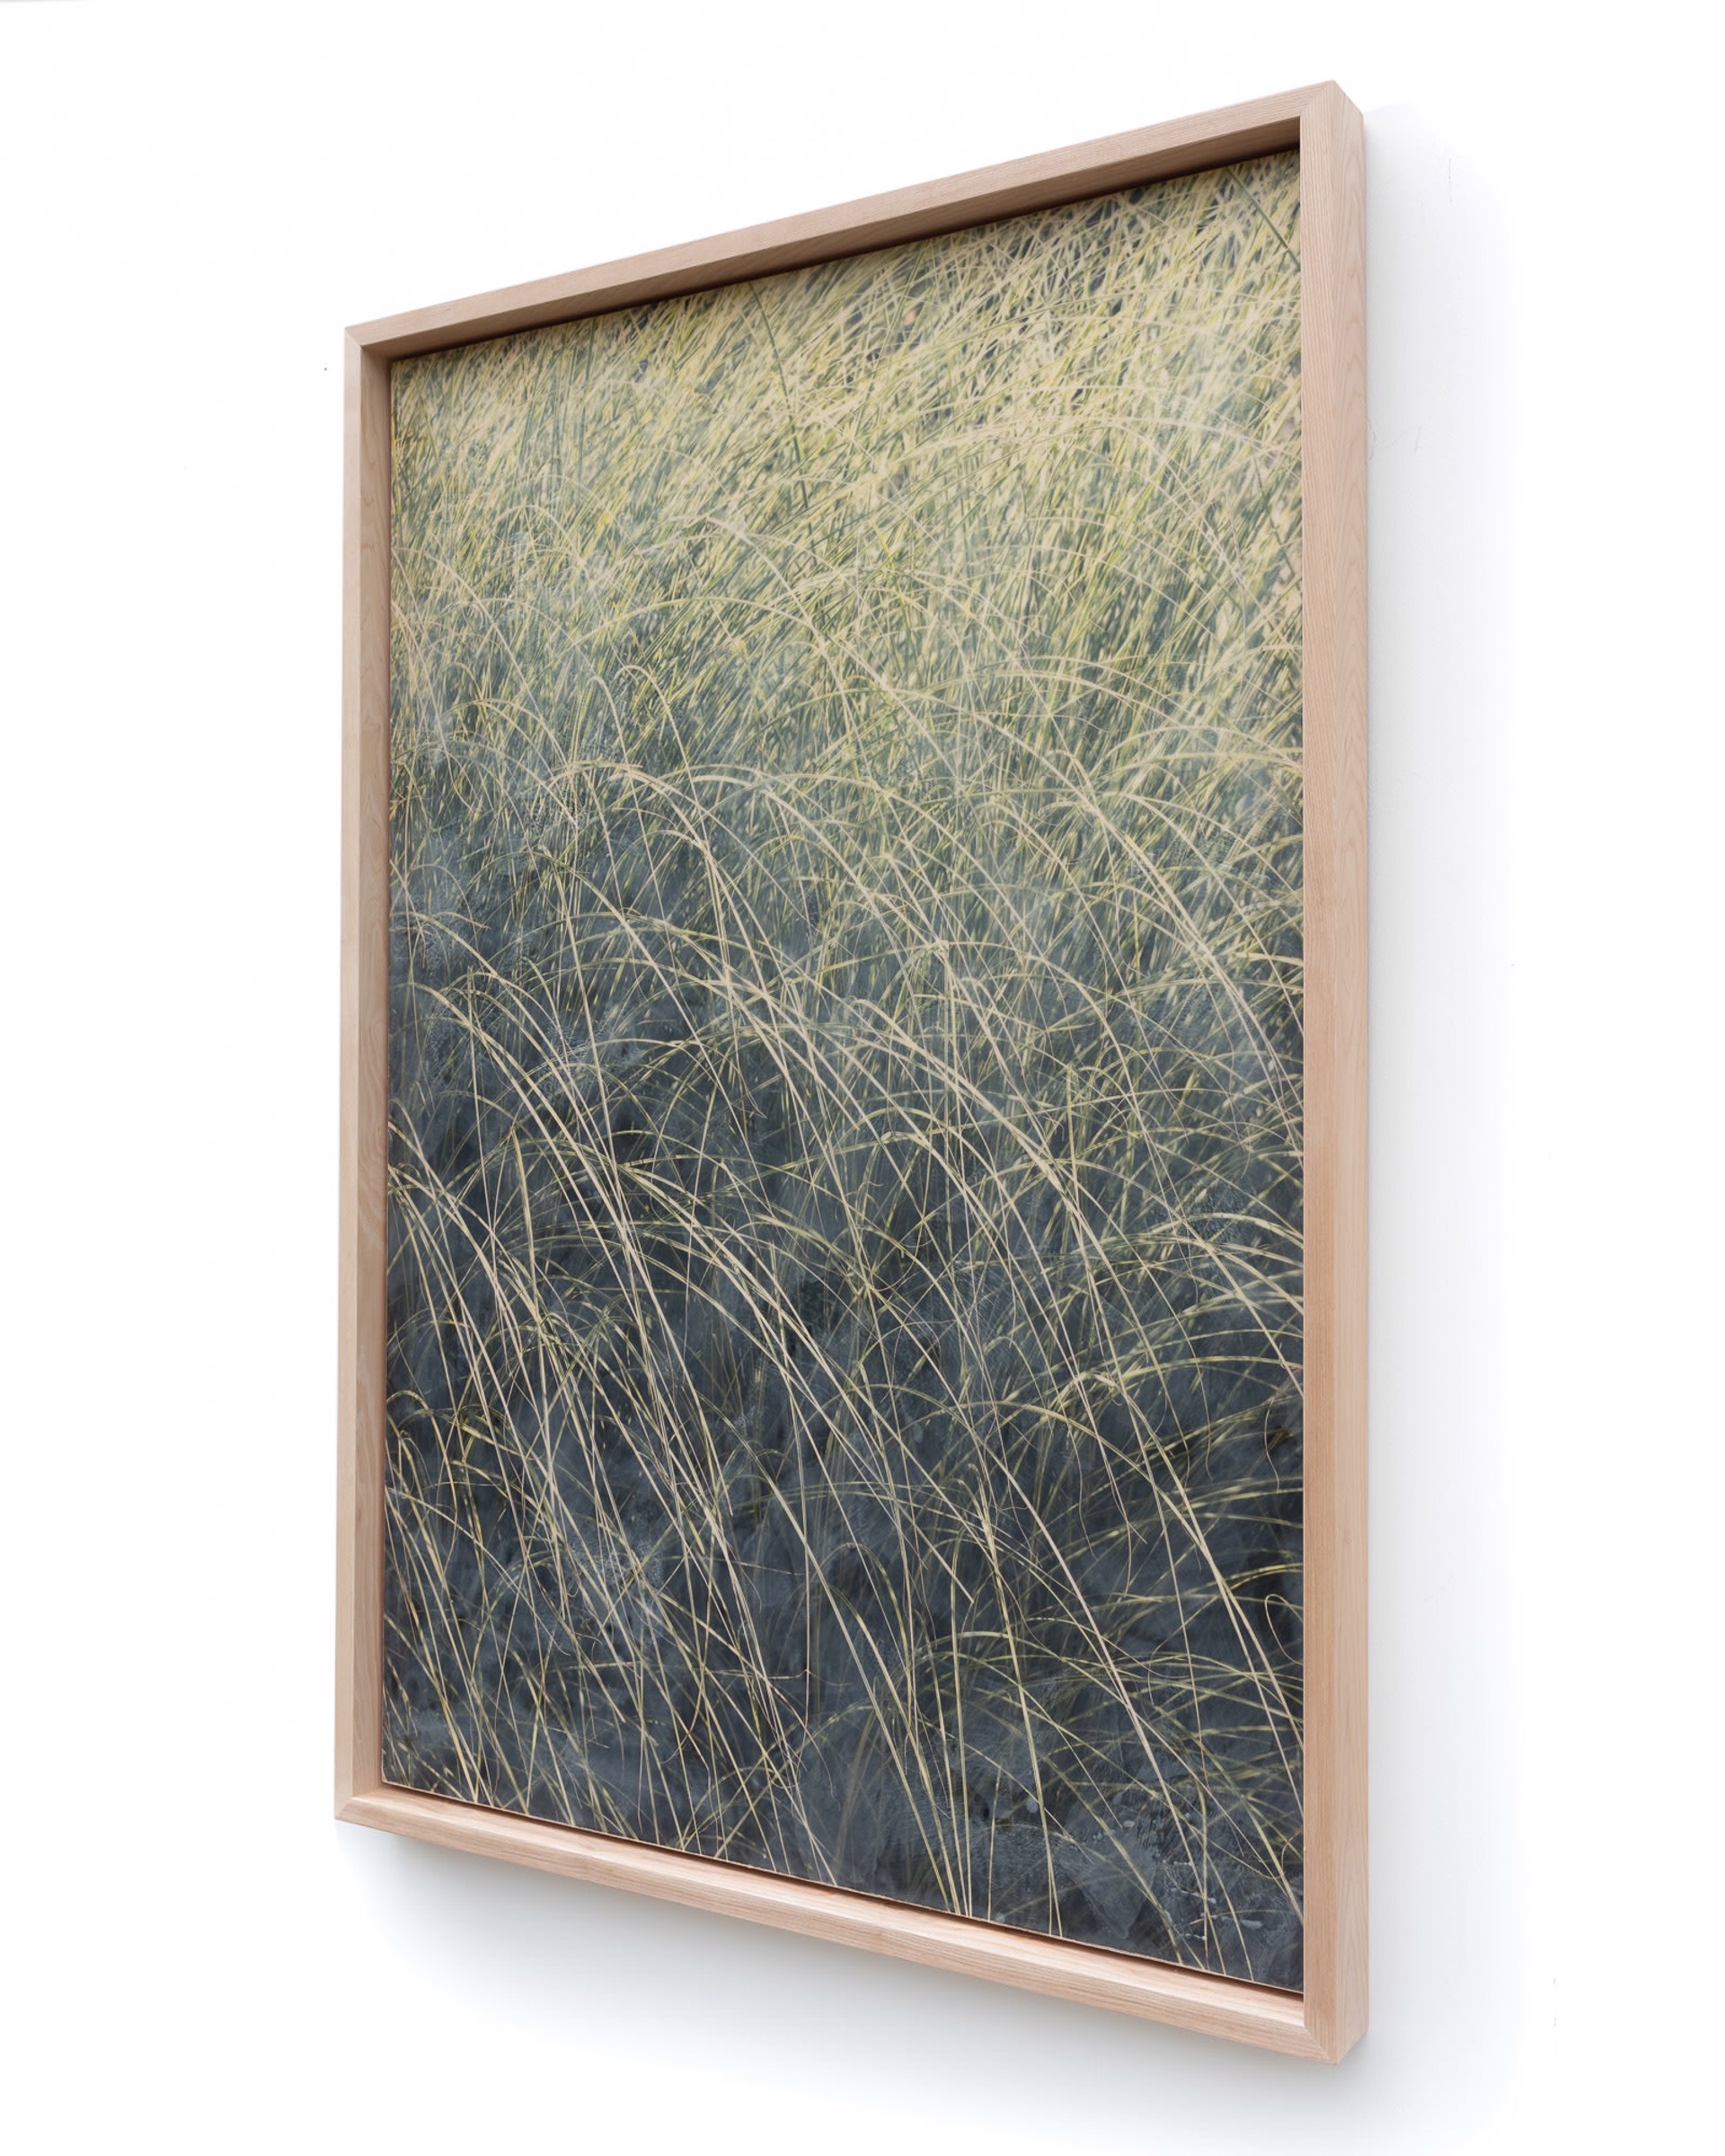 Grasses by Patrick Lajoie